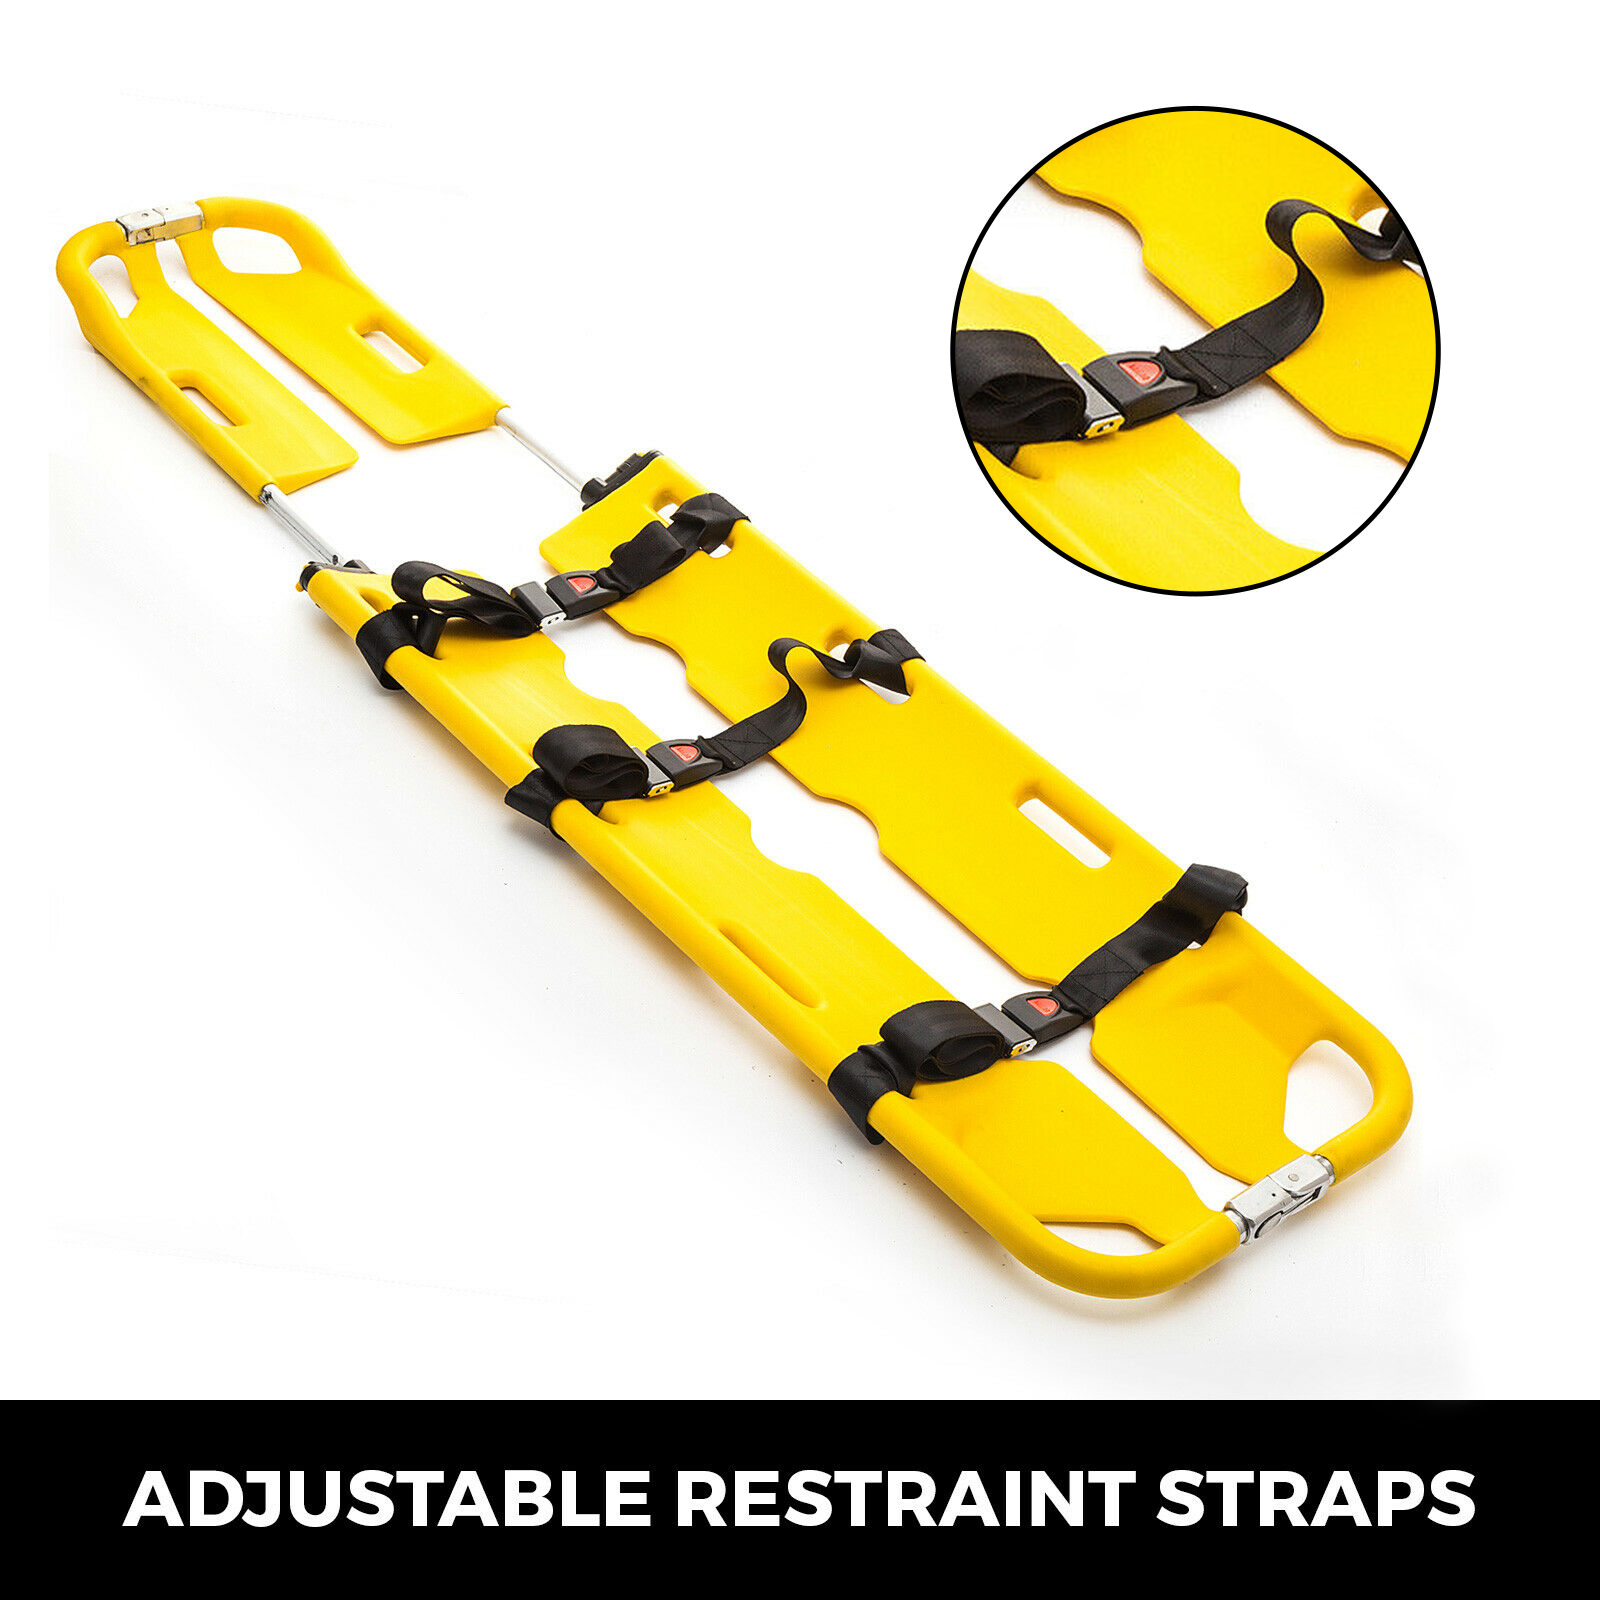 EMT Backboard Spine Board Stretcher Immobilization Kit - Yellow